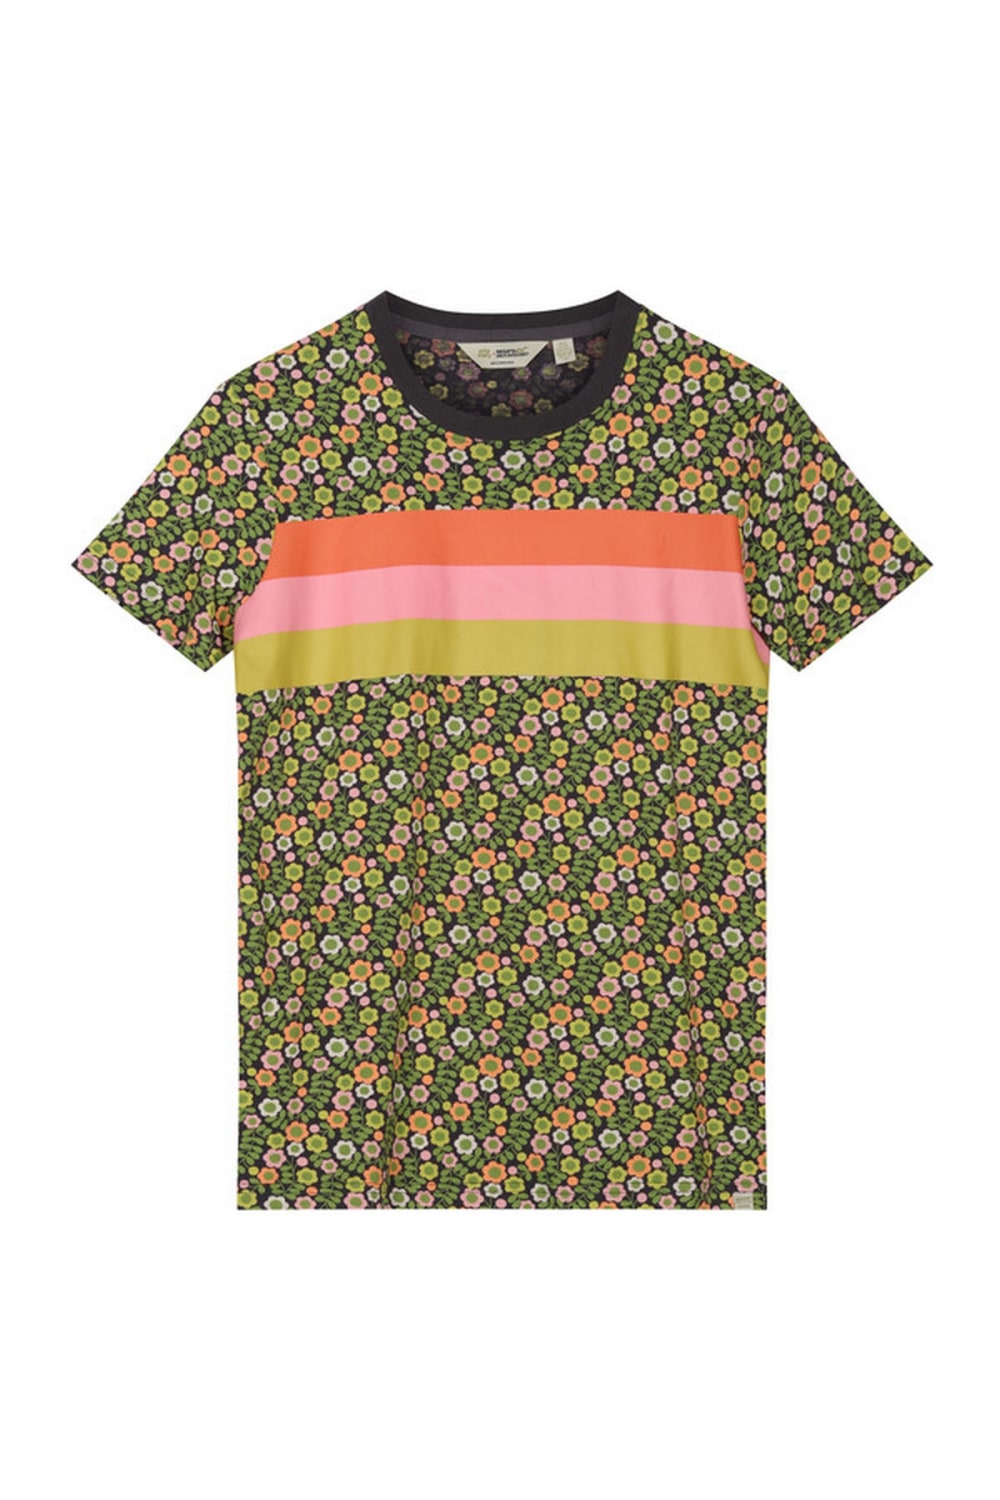 Womens/Ladies Orla Kiely Summer T-Shirt - Multicolored